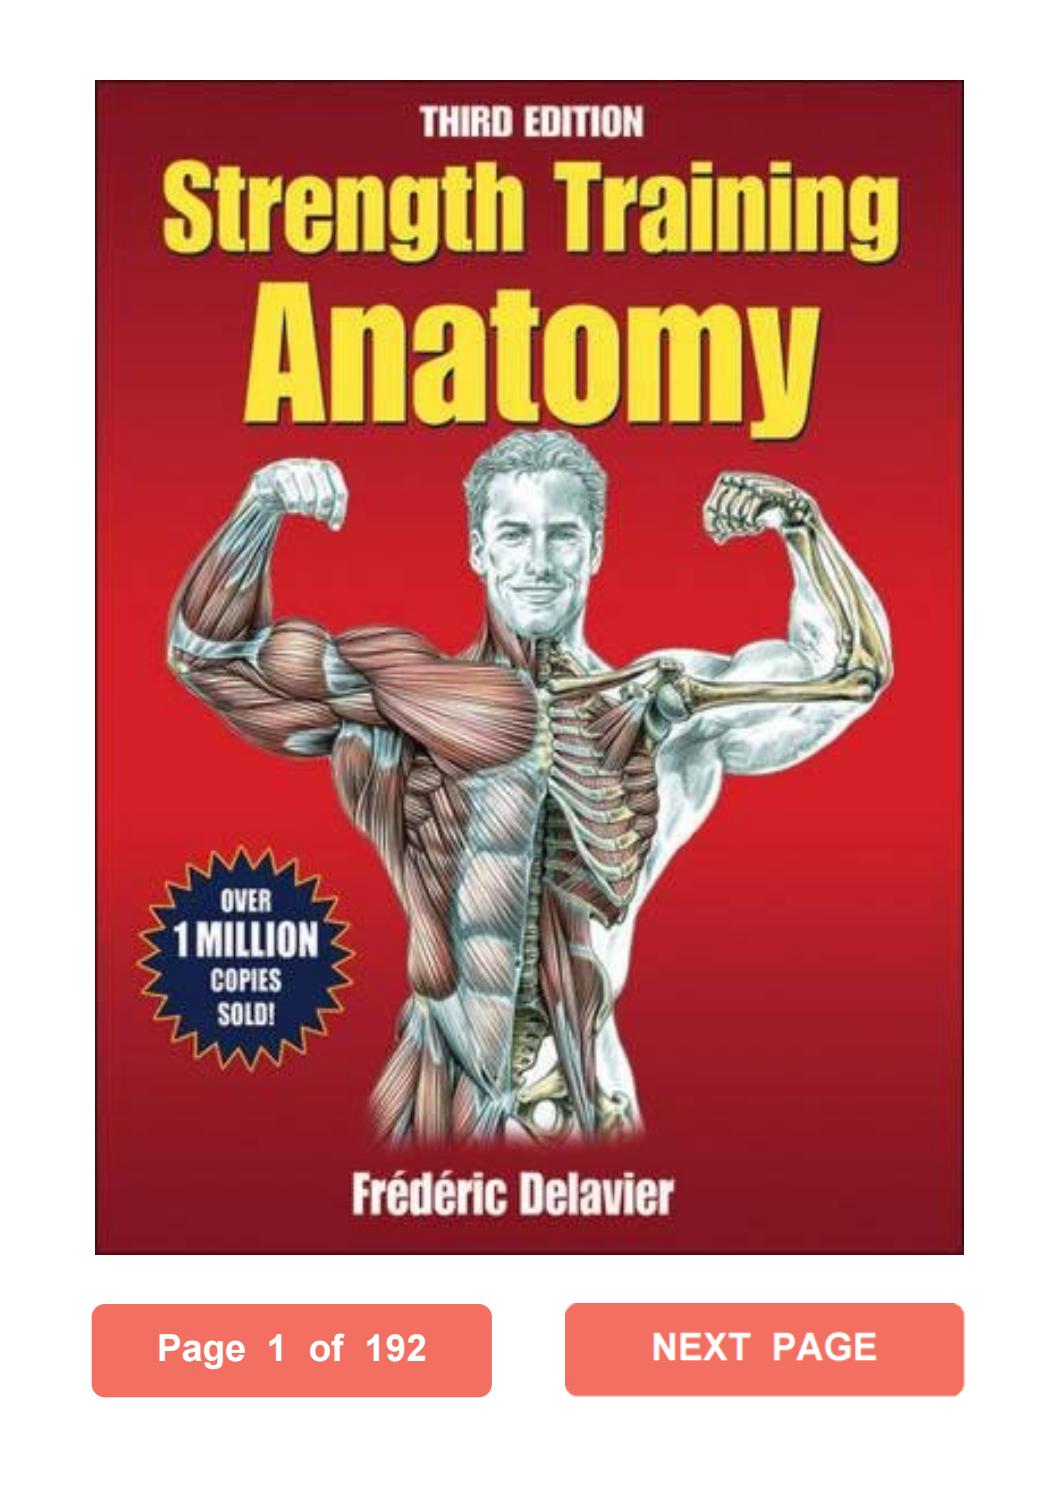 Strength training anatomy review